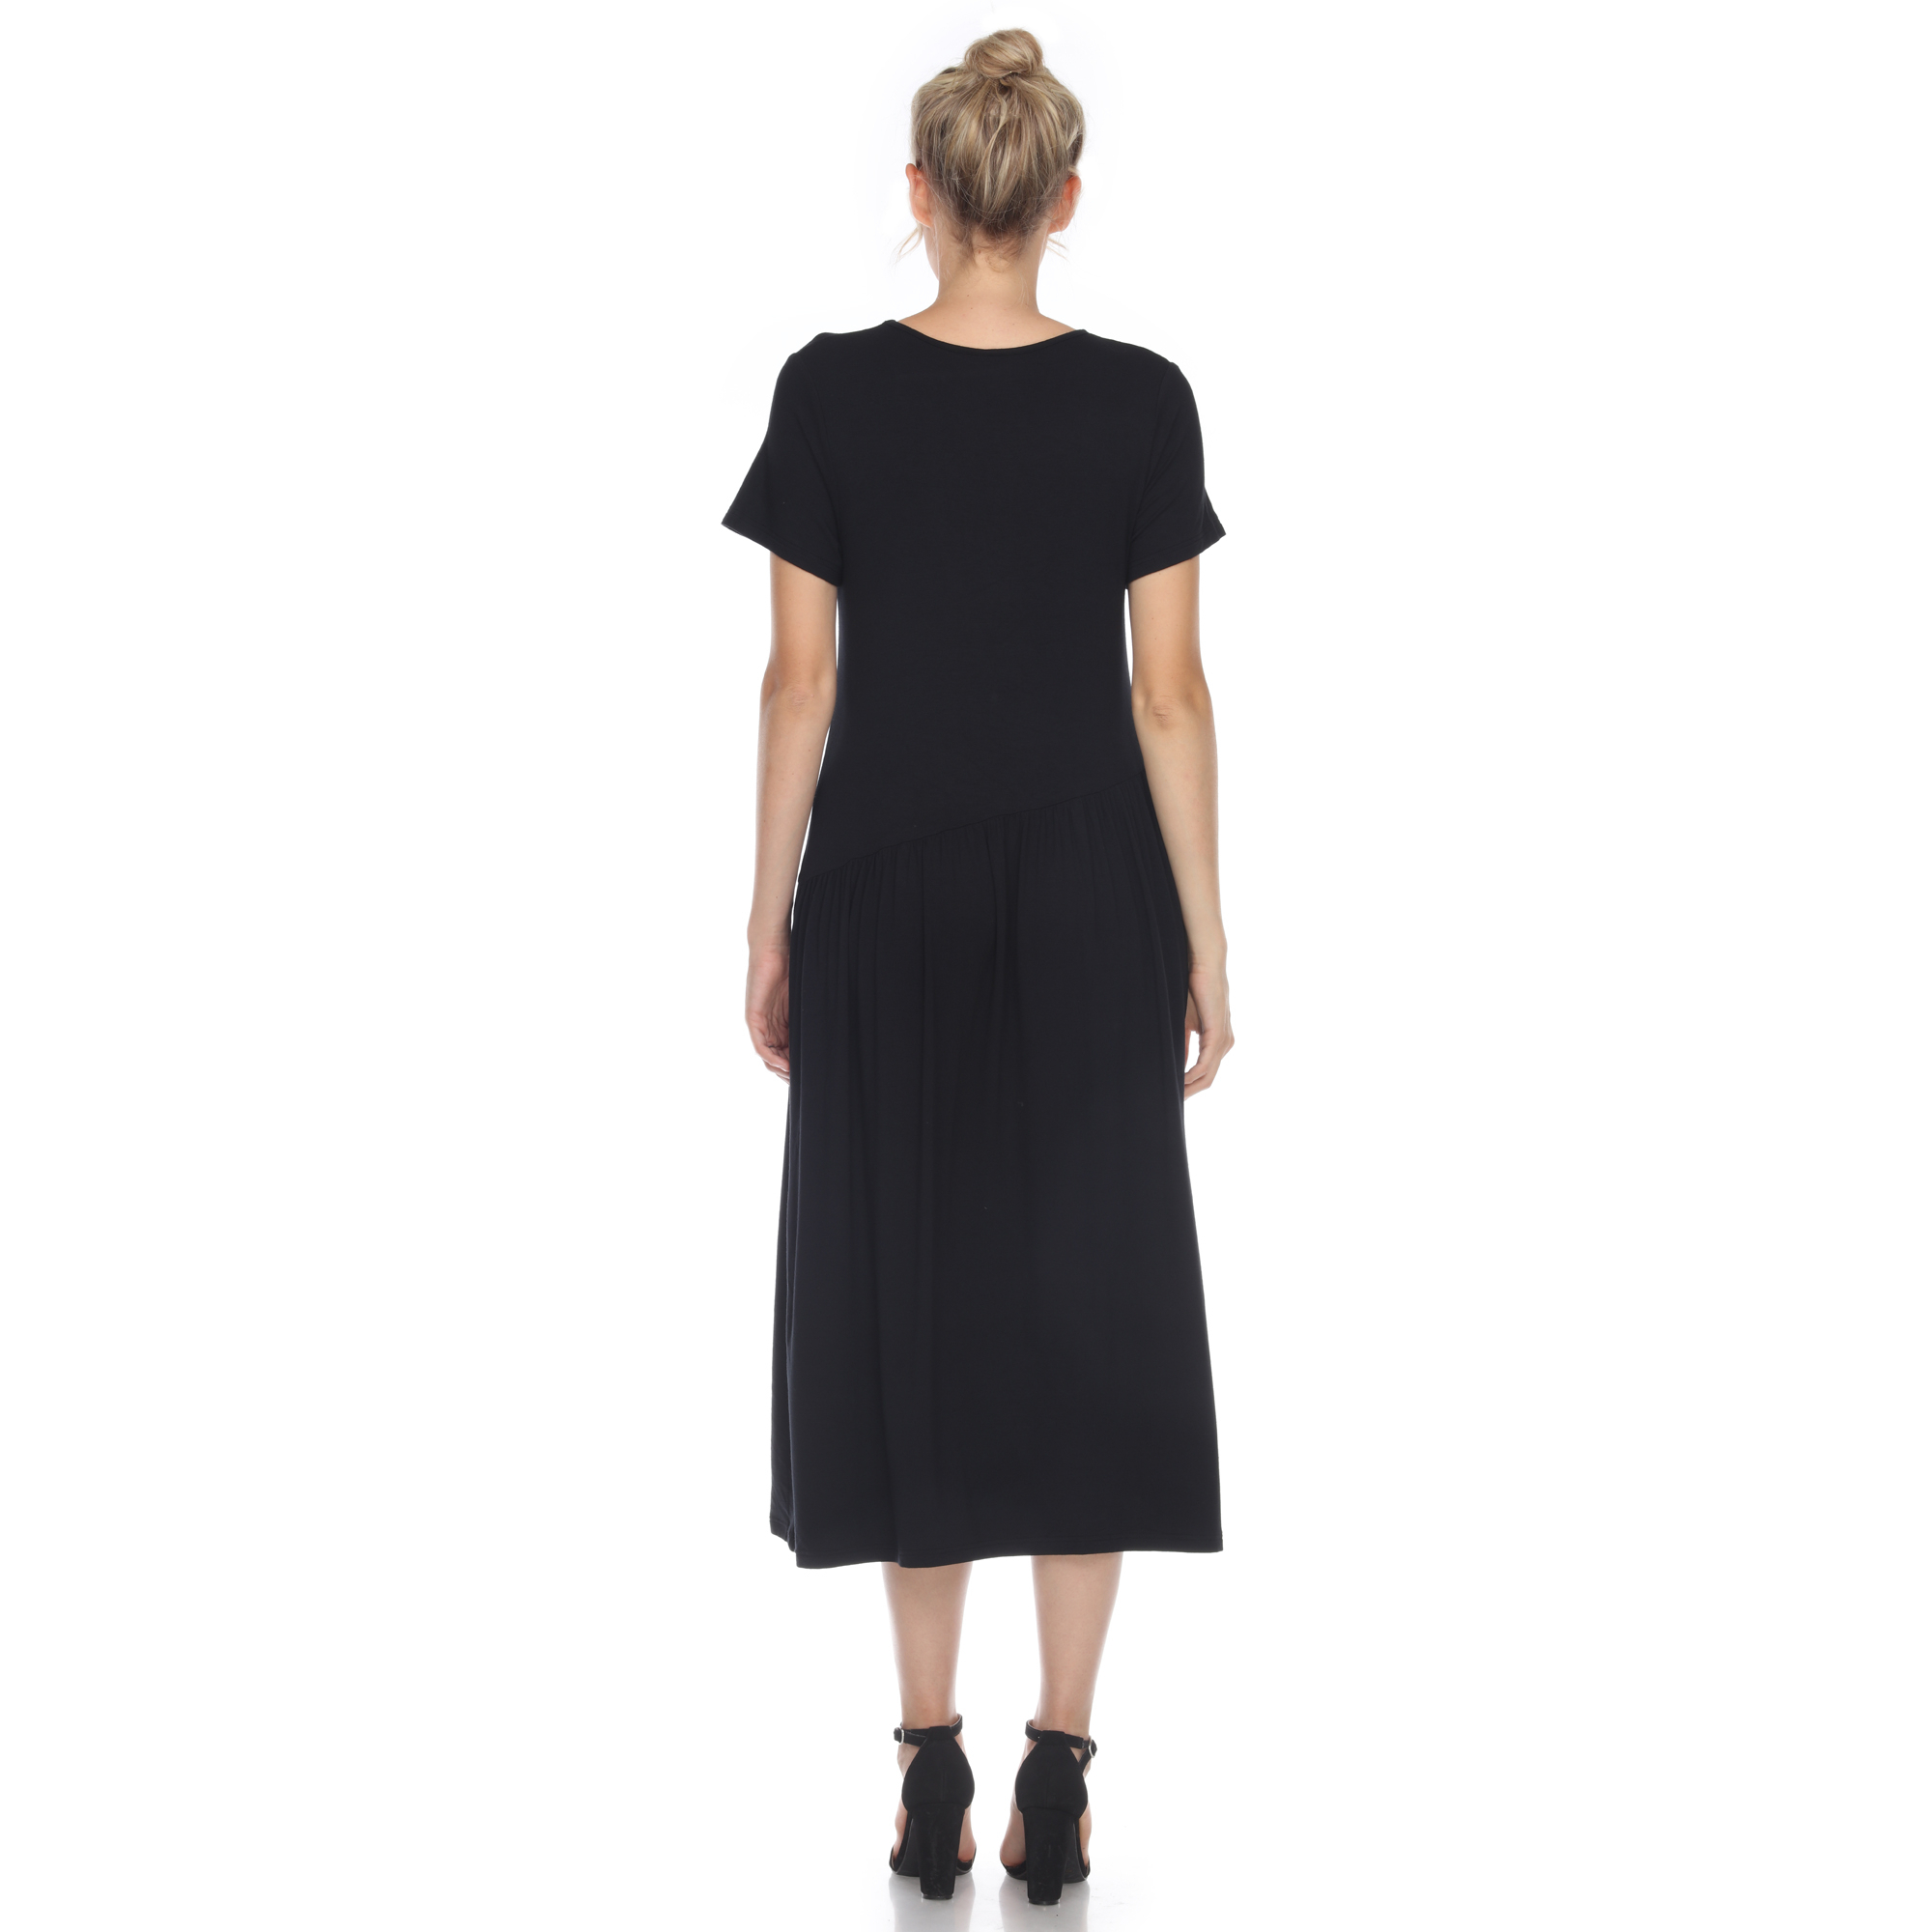 White Mark Womenâs Maternity Short Sleeve Maxi Dress - Royal, Medium